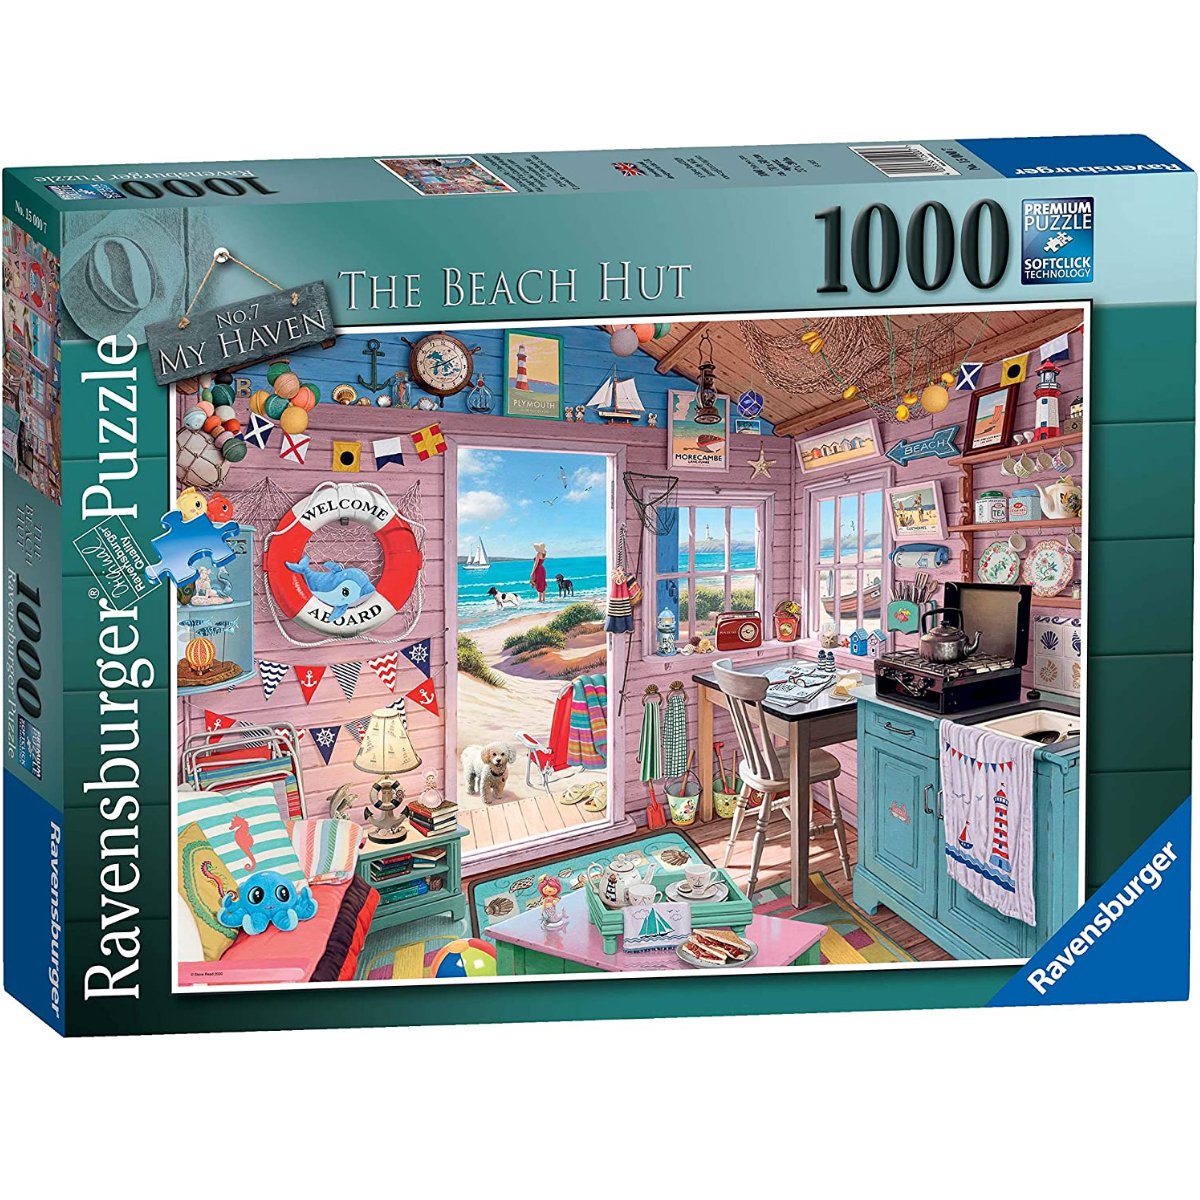 Ravensburger The Beach Hut Jigsaw Puzzle (1000 Pieces) - Phillips Hobbies